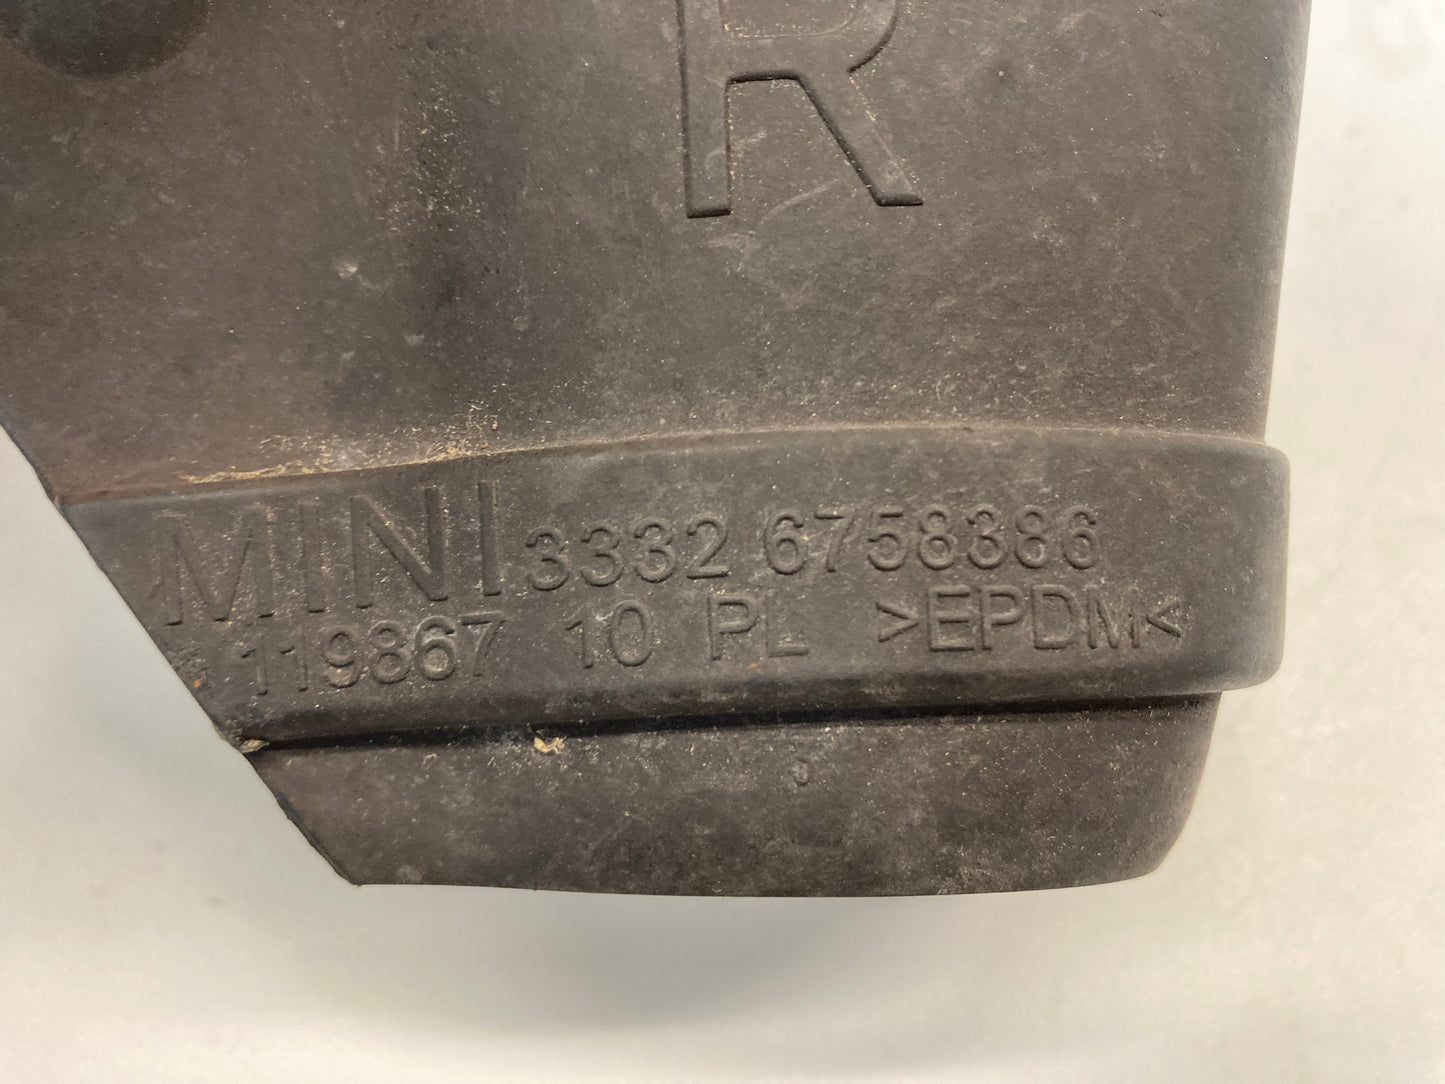 Mini Cooper Stone Chip Protection Right Rear 33326758386 02-08 R50 R52 R53